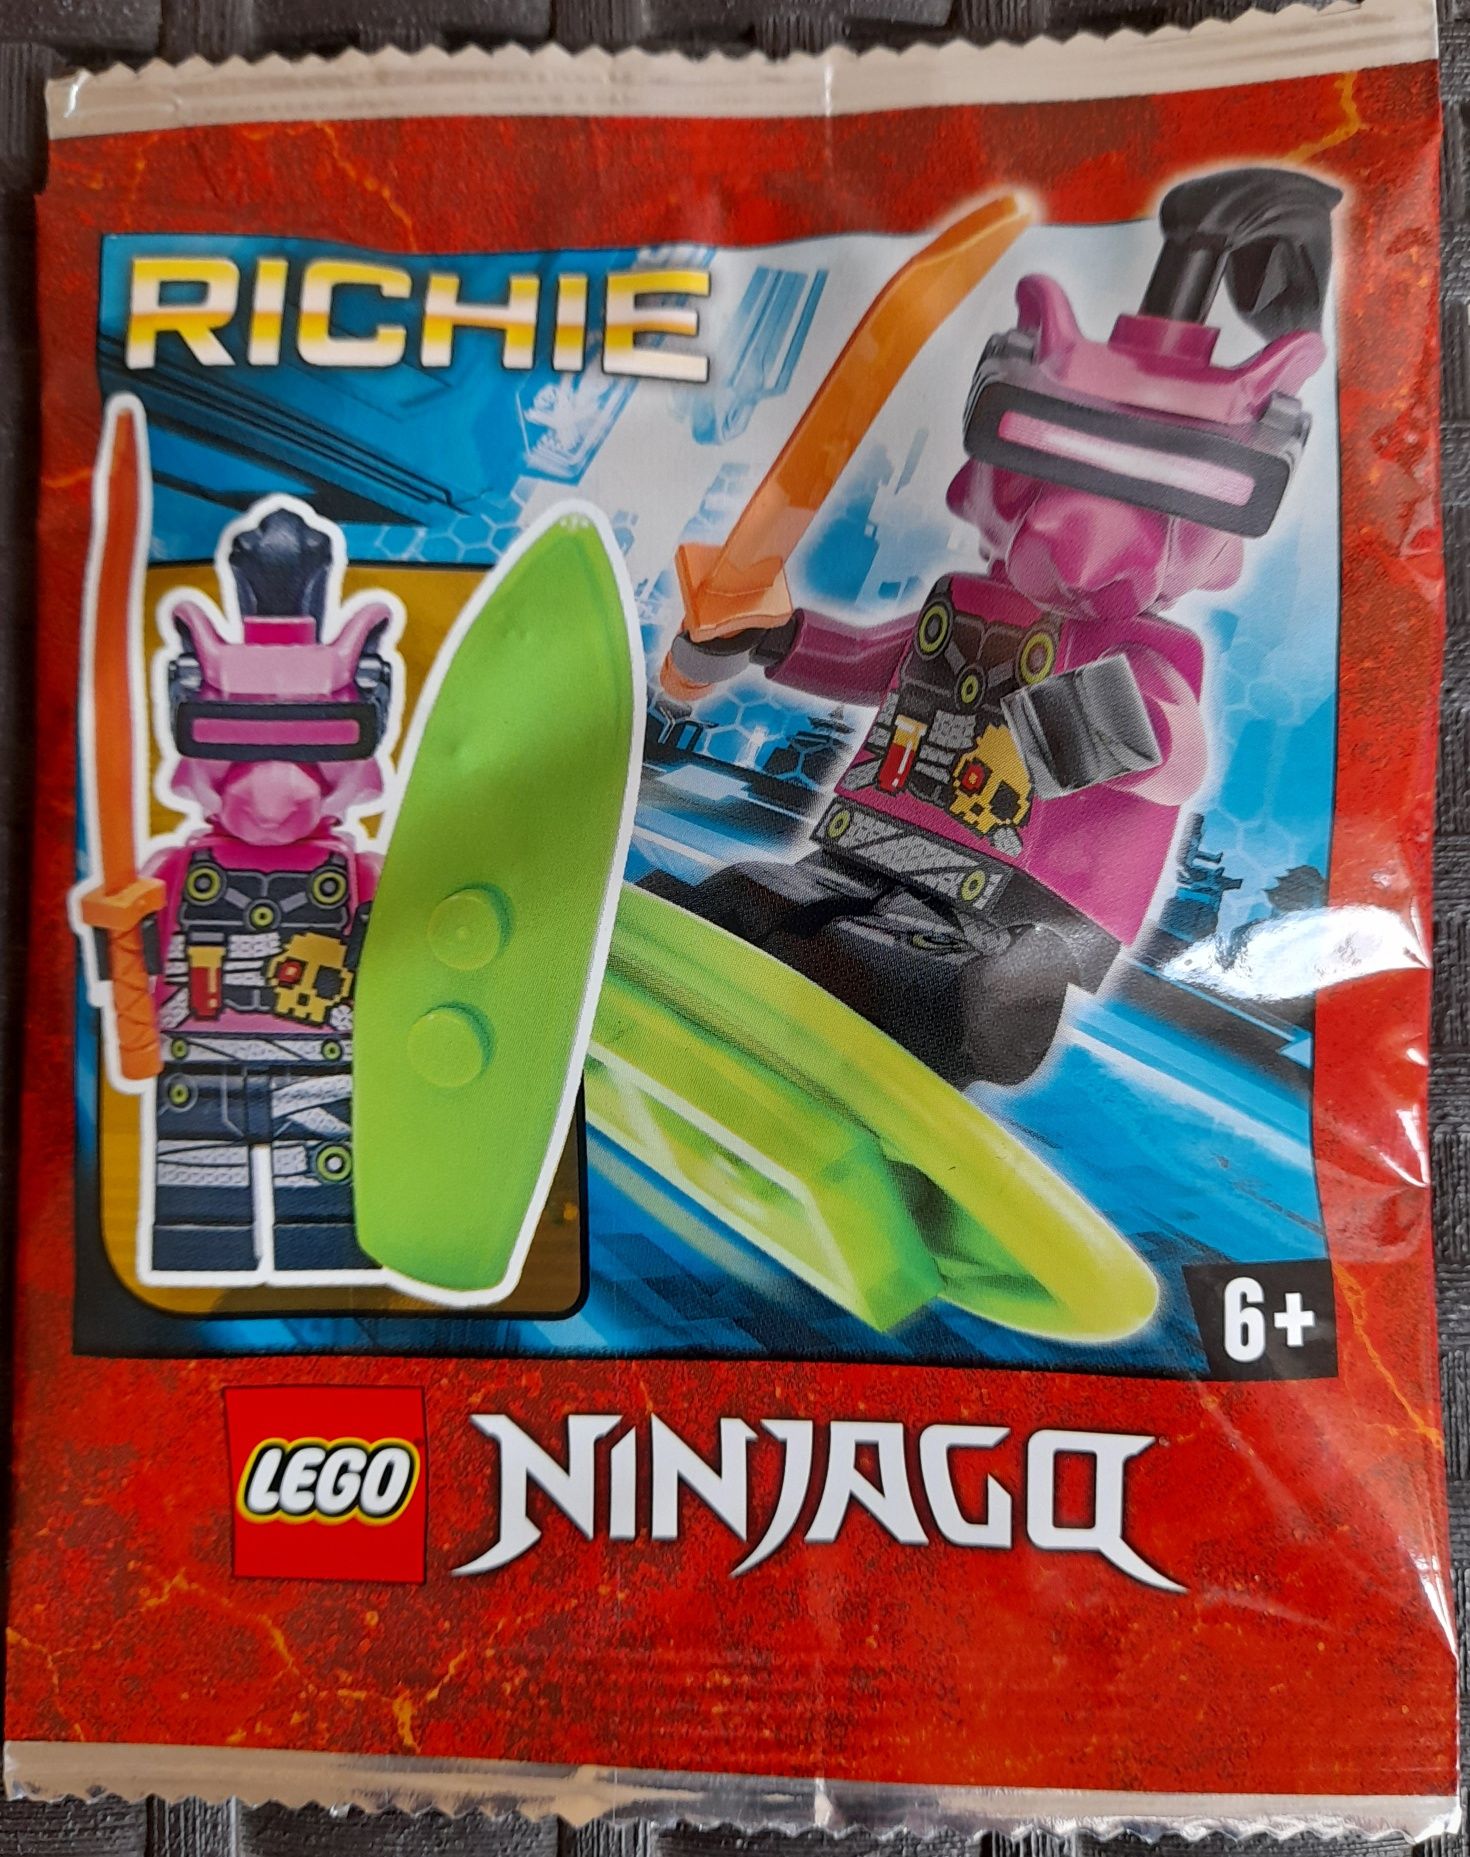 Lego ninjago Richie nowa saszetka